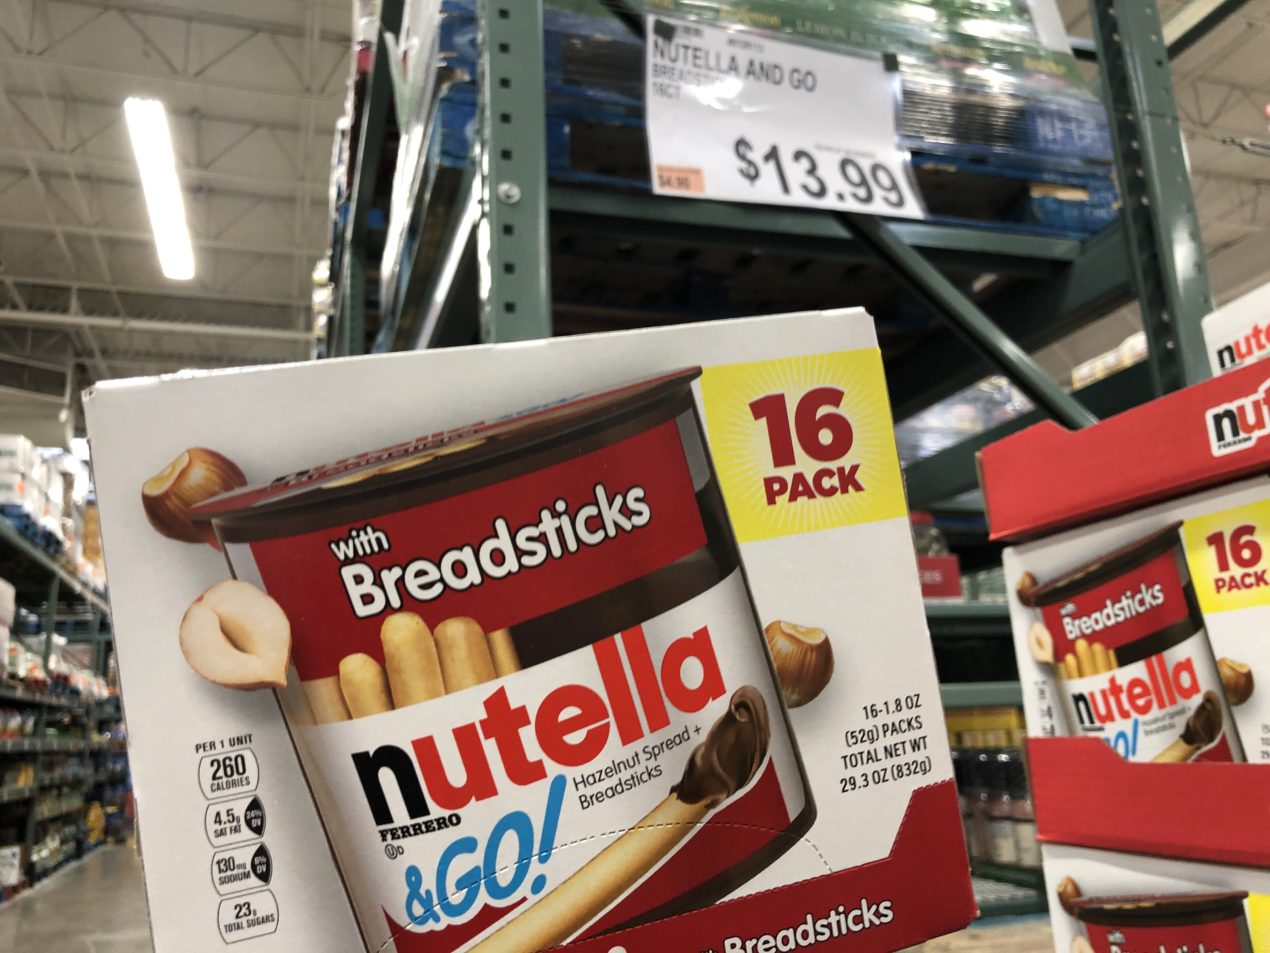 Ferrero Nutella & Go! with Breadsticks, 16 ct at BJ's